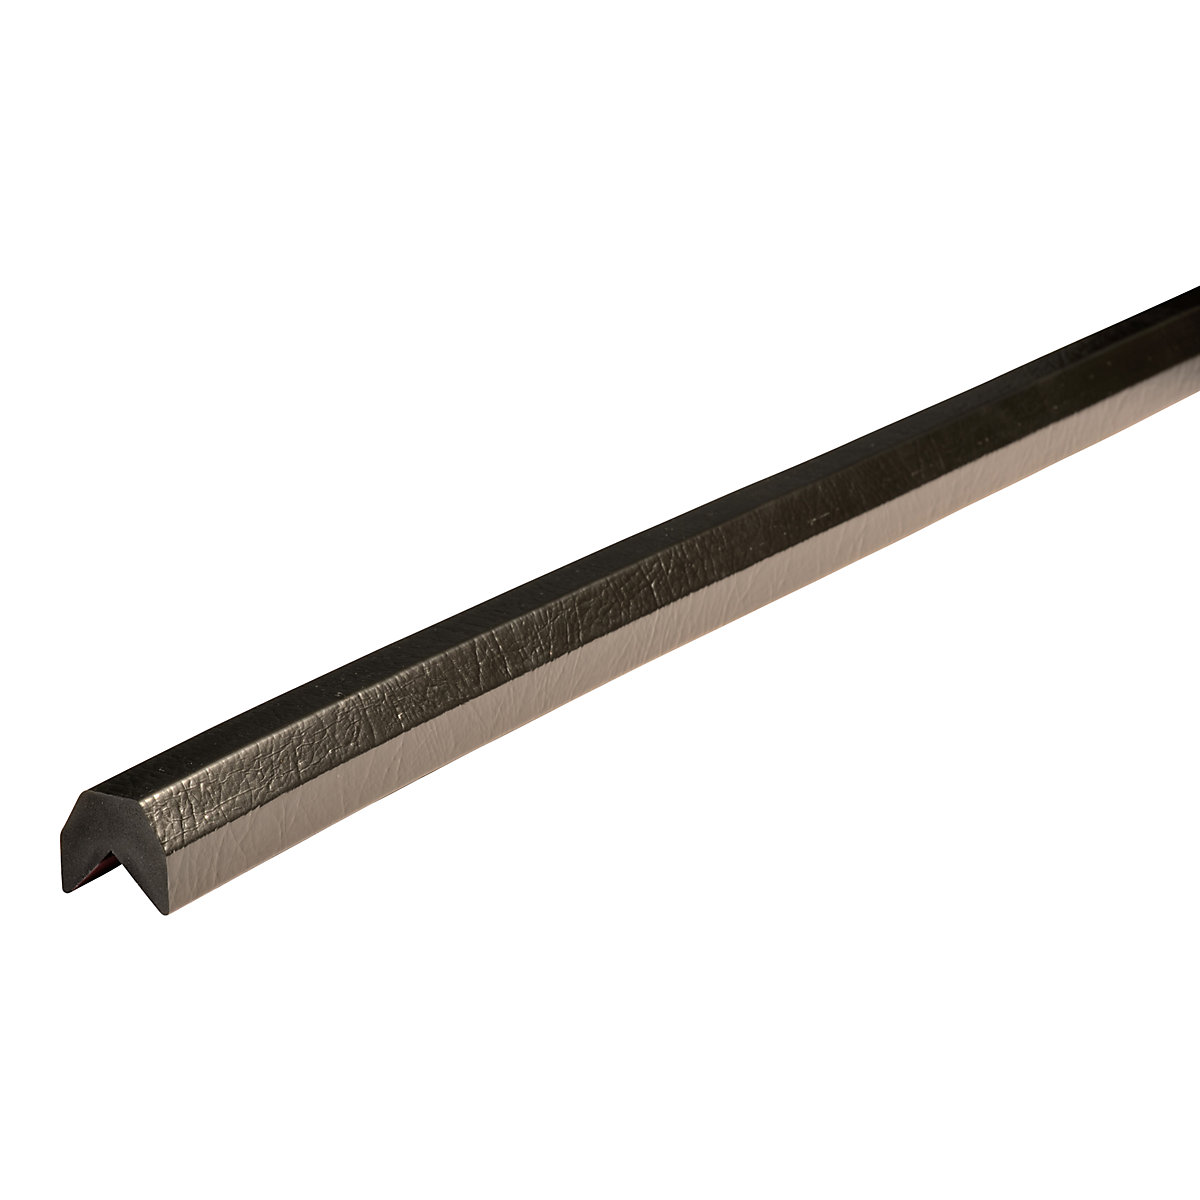 Knuffi® corner protection – SHG, type AA, 1 x 5 m roll, black-14